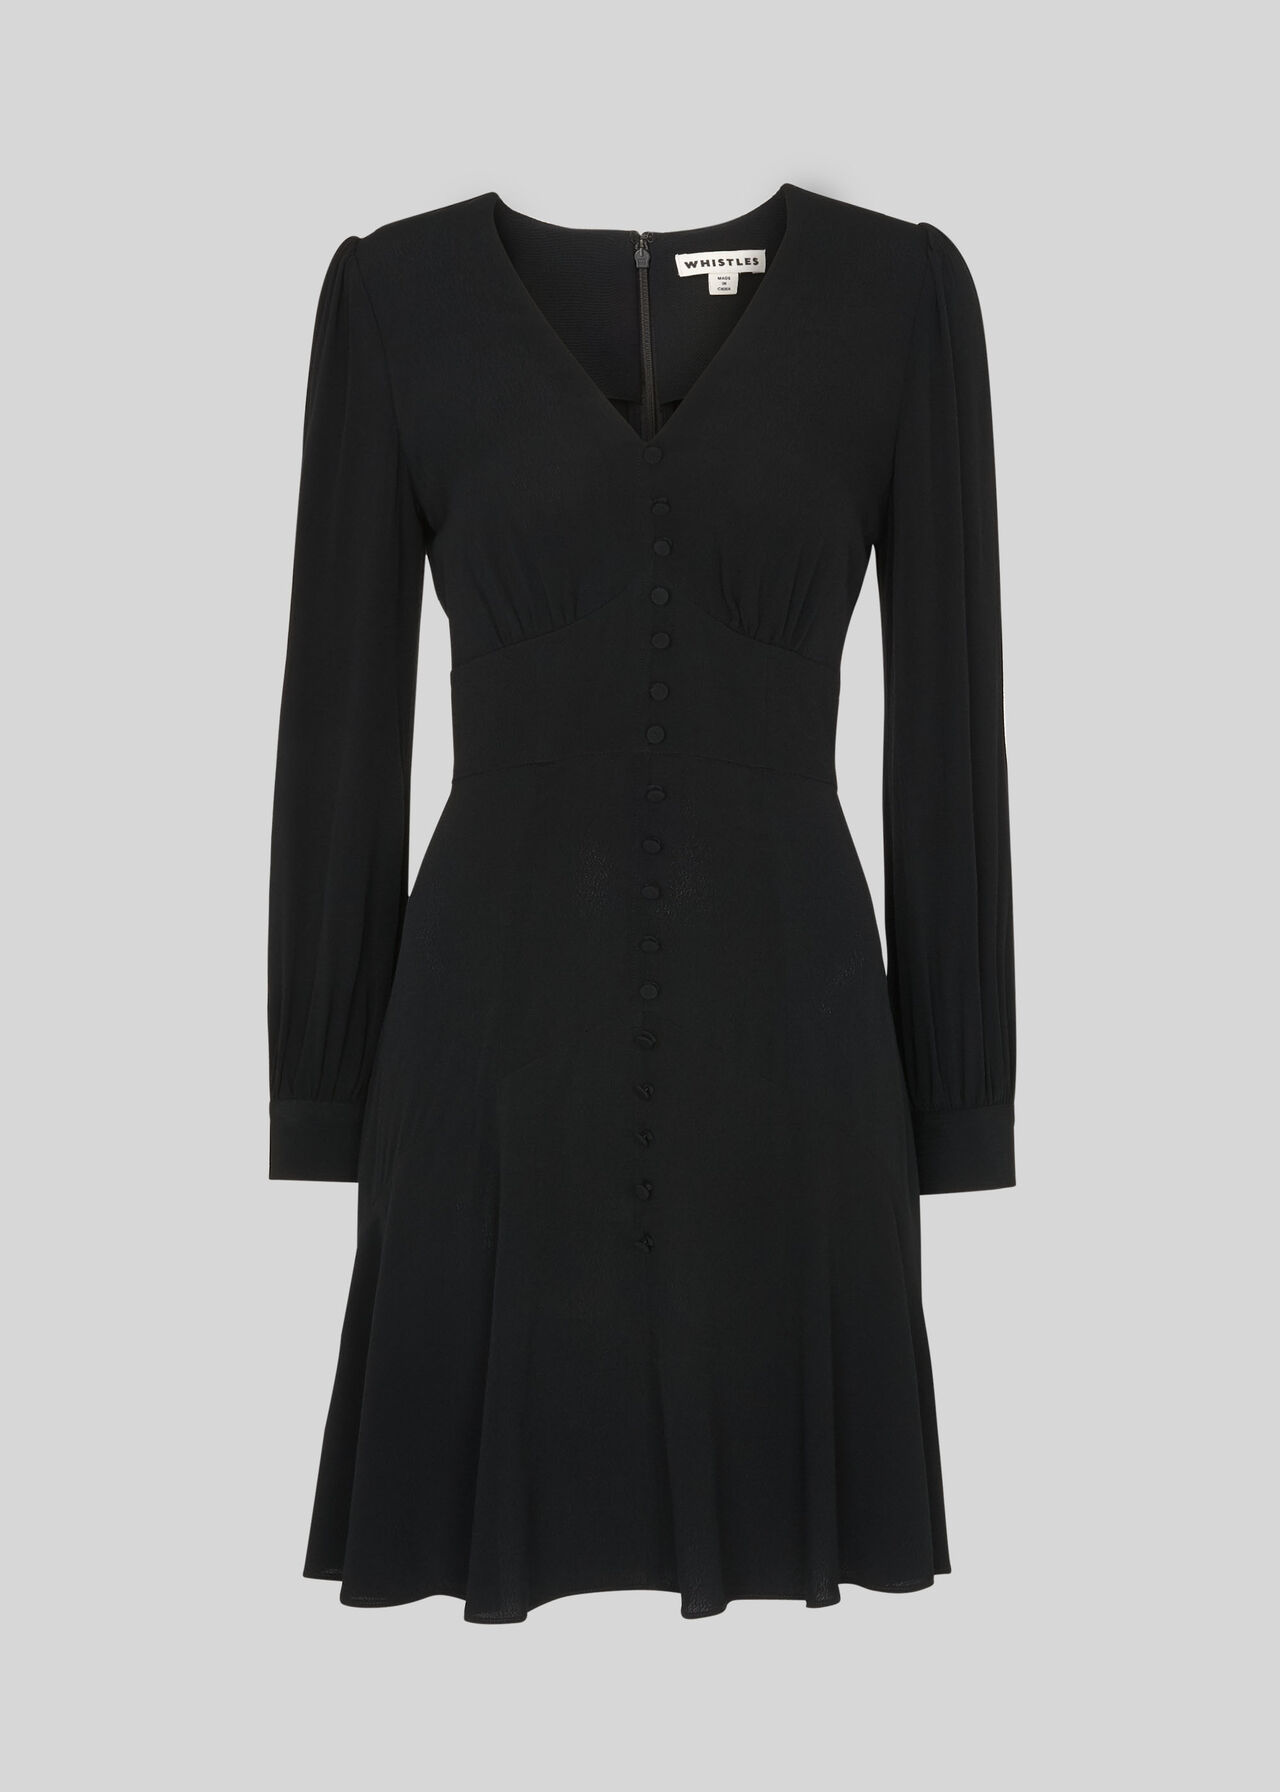 Black Short Button Through Dress | WHISTLES